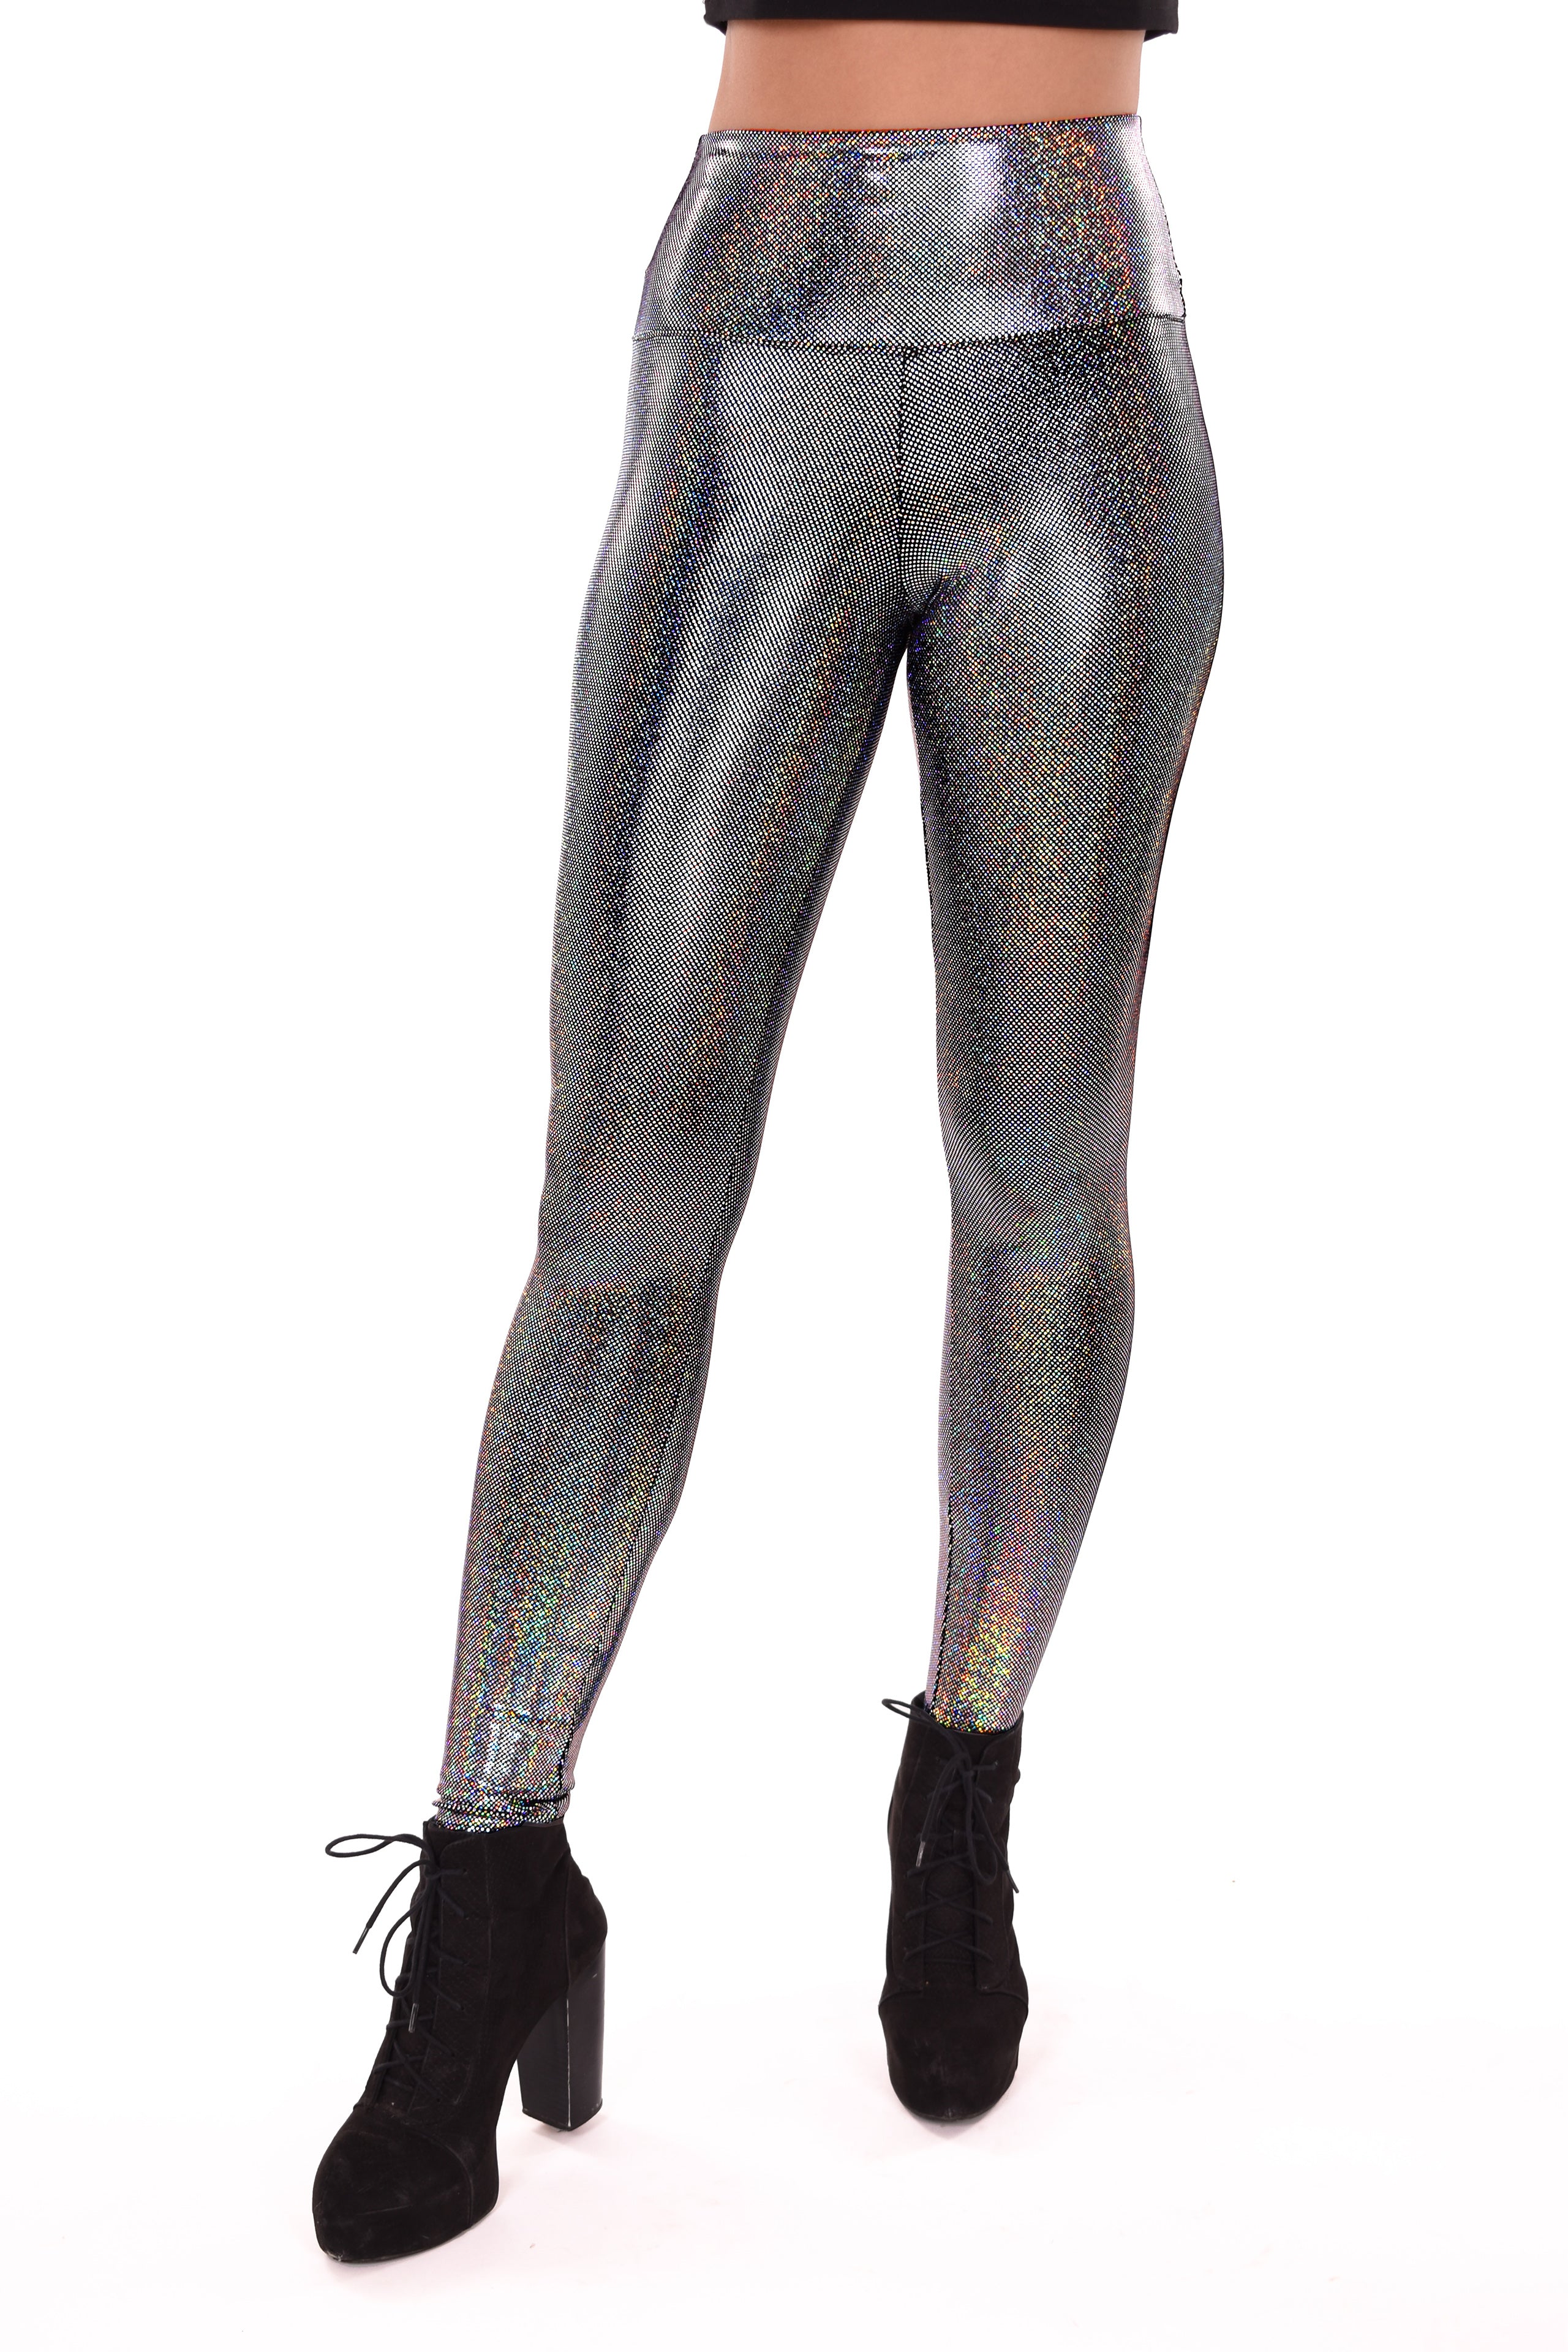 Women's Silver Iridescent Sparkle Holographic Leggings - Silver Dancer – Funstigators